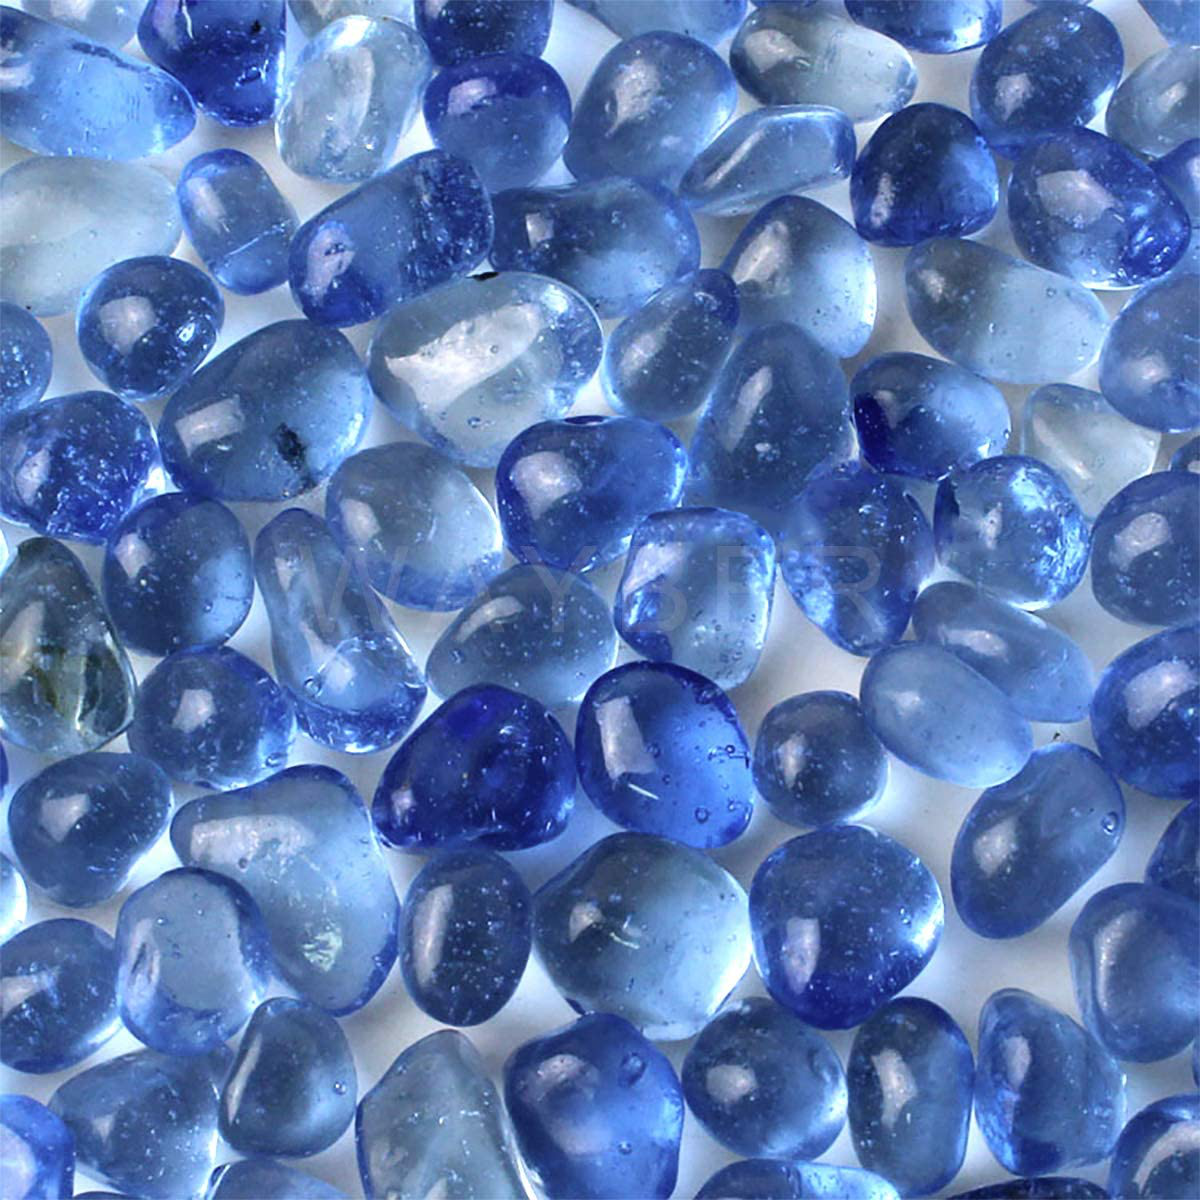 WAYBER Glass Stones, 1Lb/460G Irregular Sea Glass Pebbles Non-Toxic Artificial Crystal Gemstones for Aquarium Turtle Tank Vase Filler Terrarium Flowerpot Decoration, Lake Blue